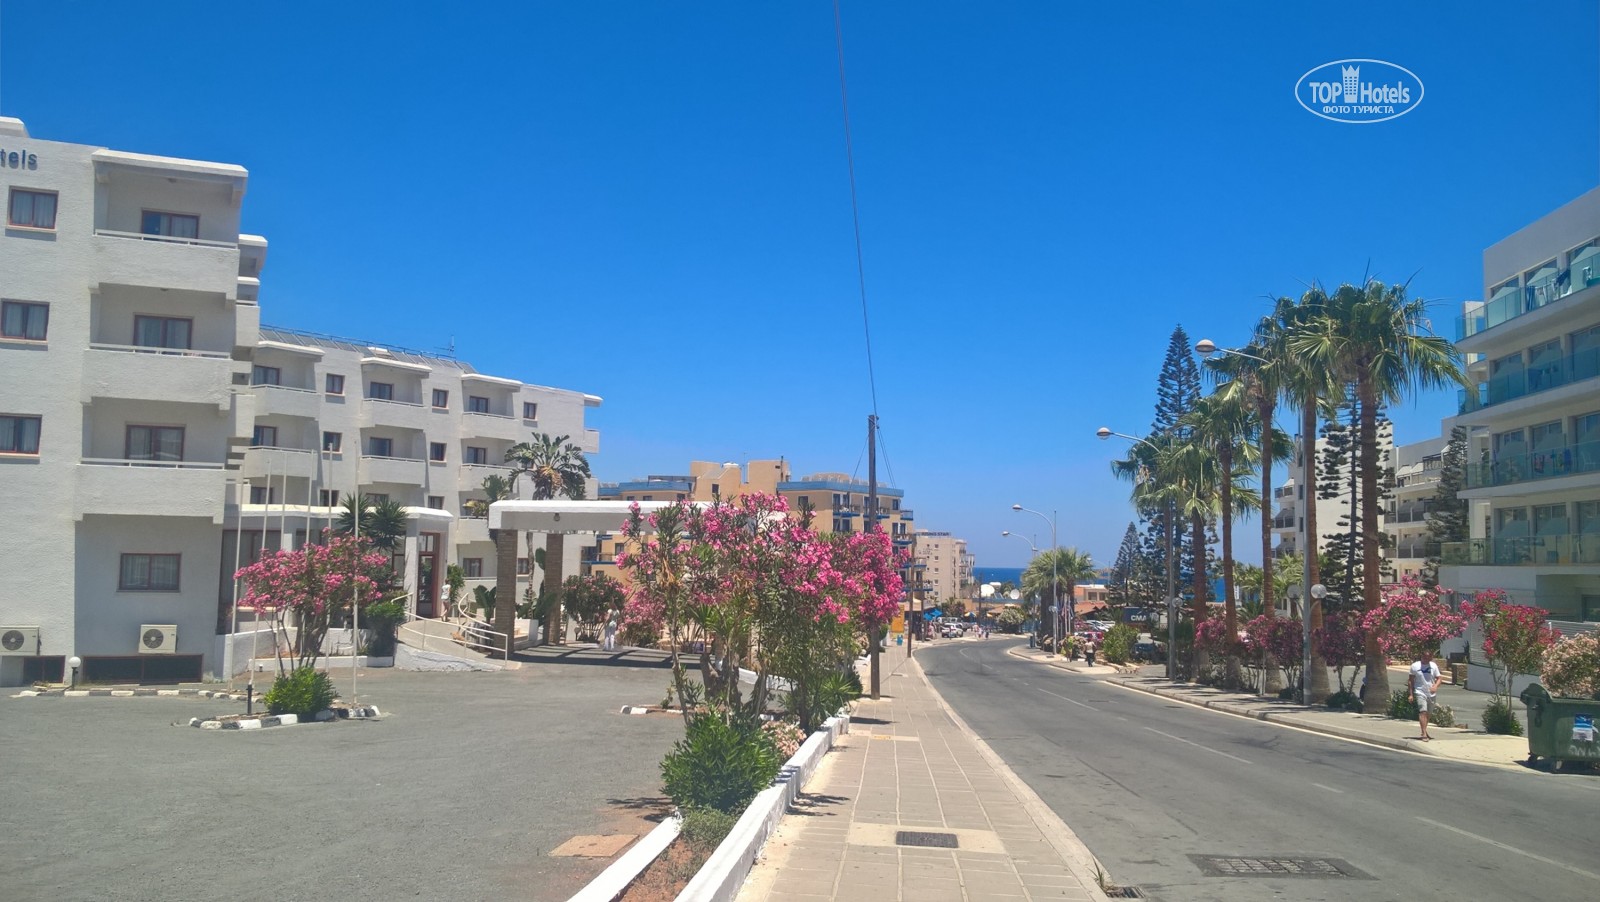 Hotel, Protaras, Cyprus, Tropical Dreams Hotel Apartments